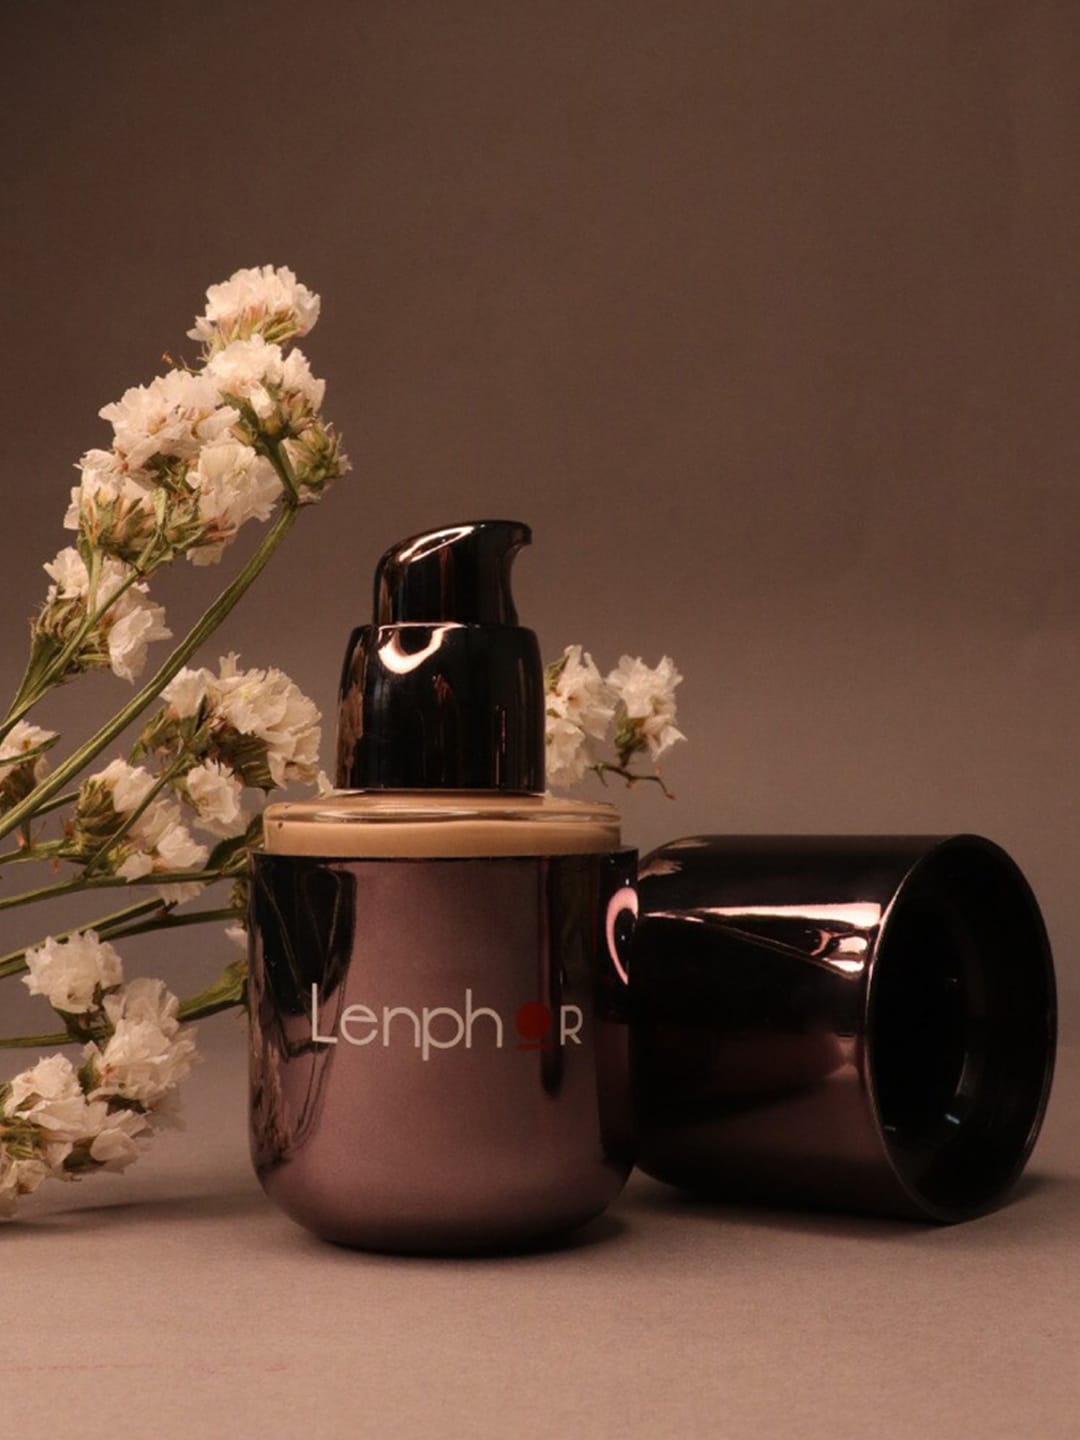 Lenphor Luminous Foundation 30 ml - Honey 04 Price in India